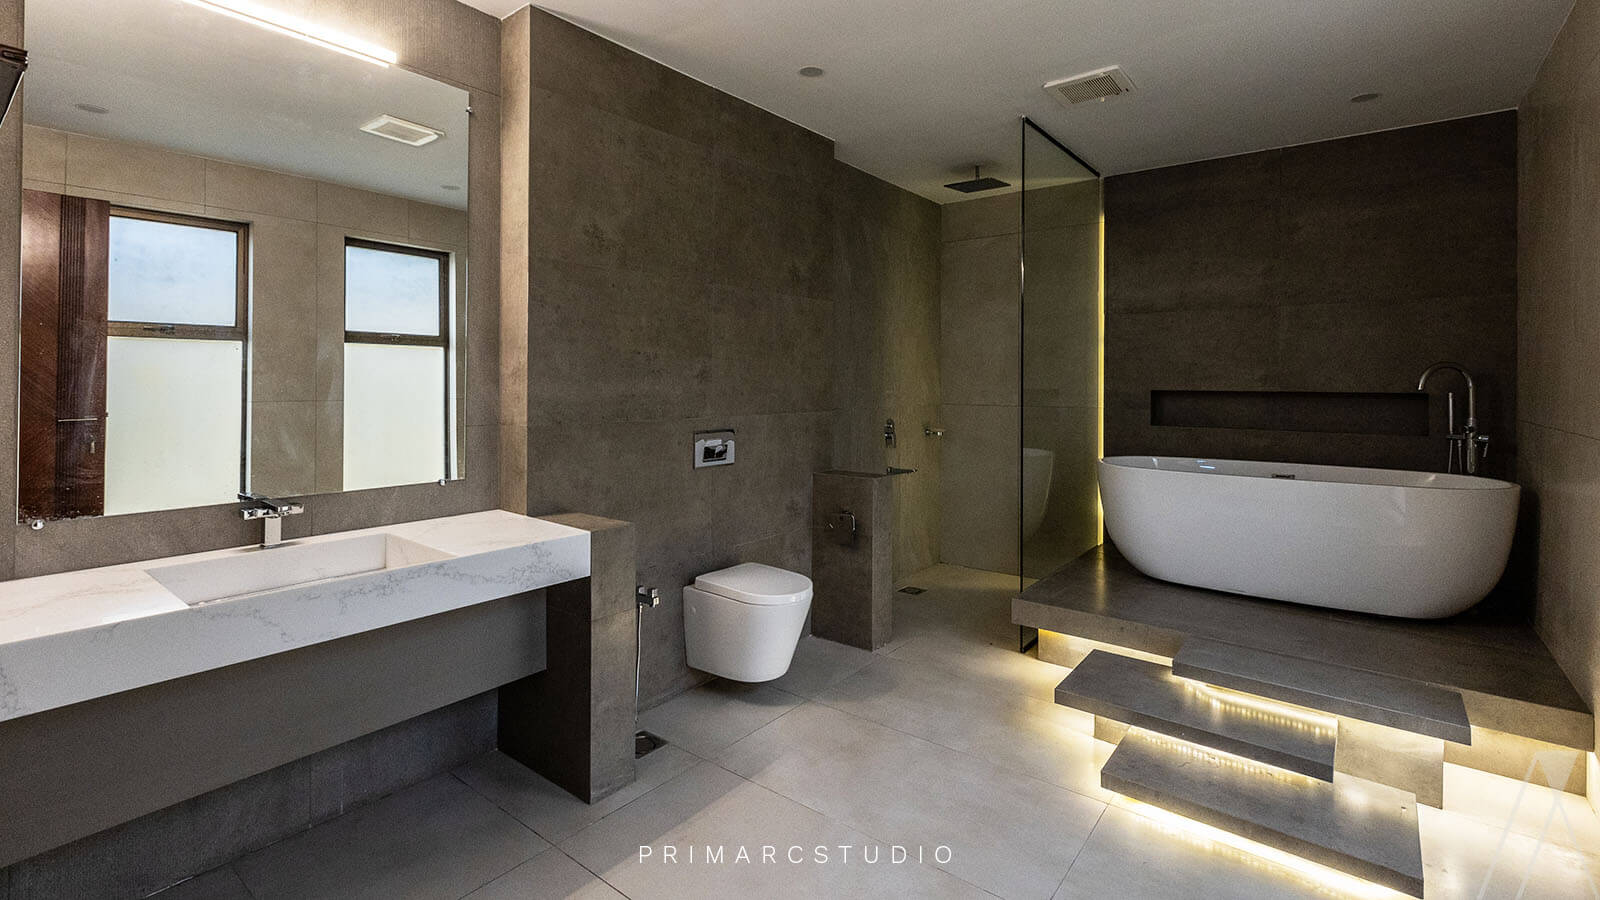 Master washroom with corian custom sink designed by Primarc Studio